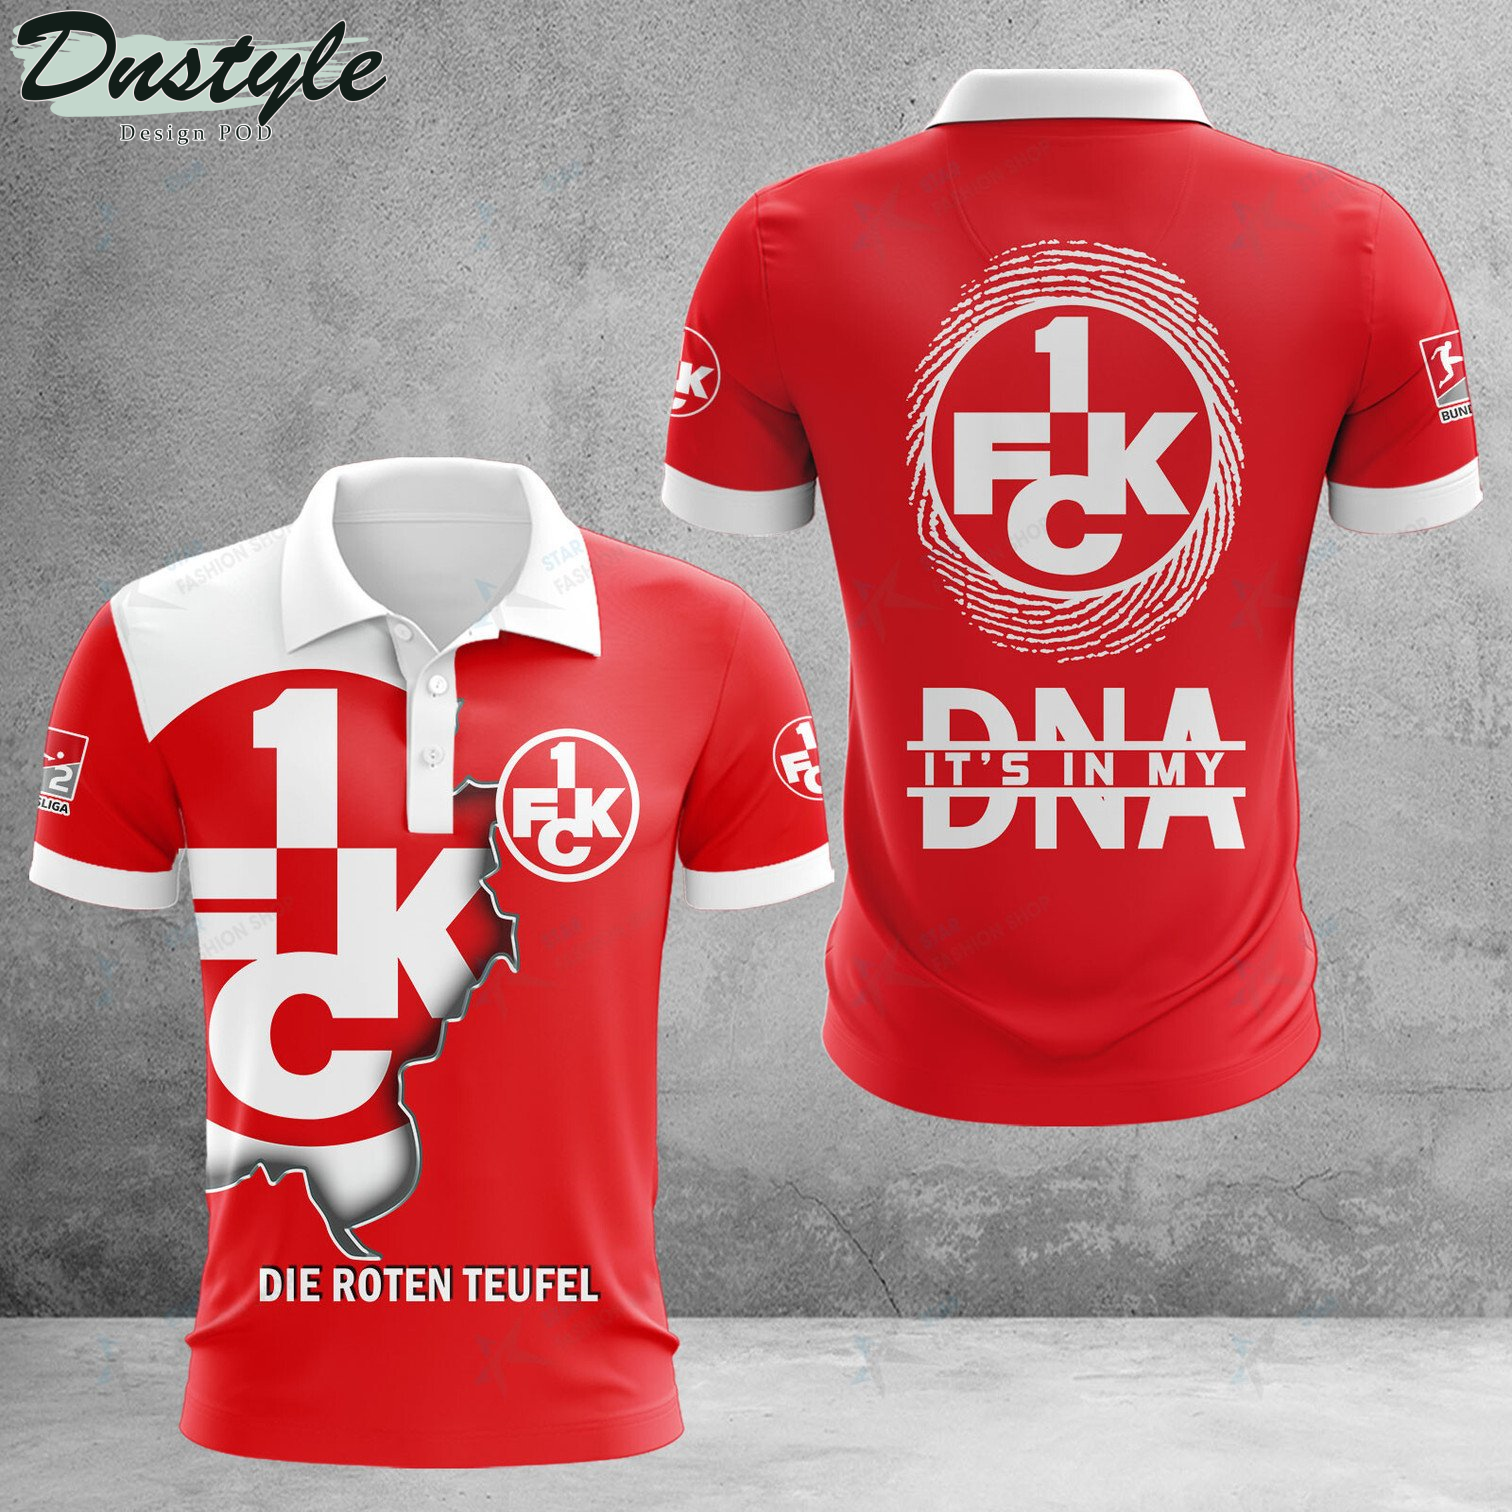 1. FC Kaiserslautern it's in my DNA polo shirt